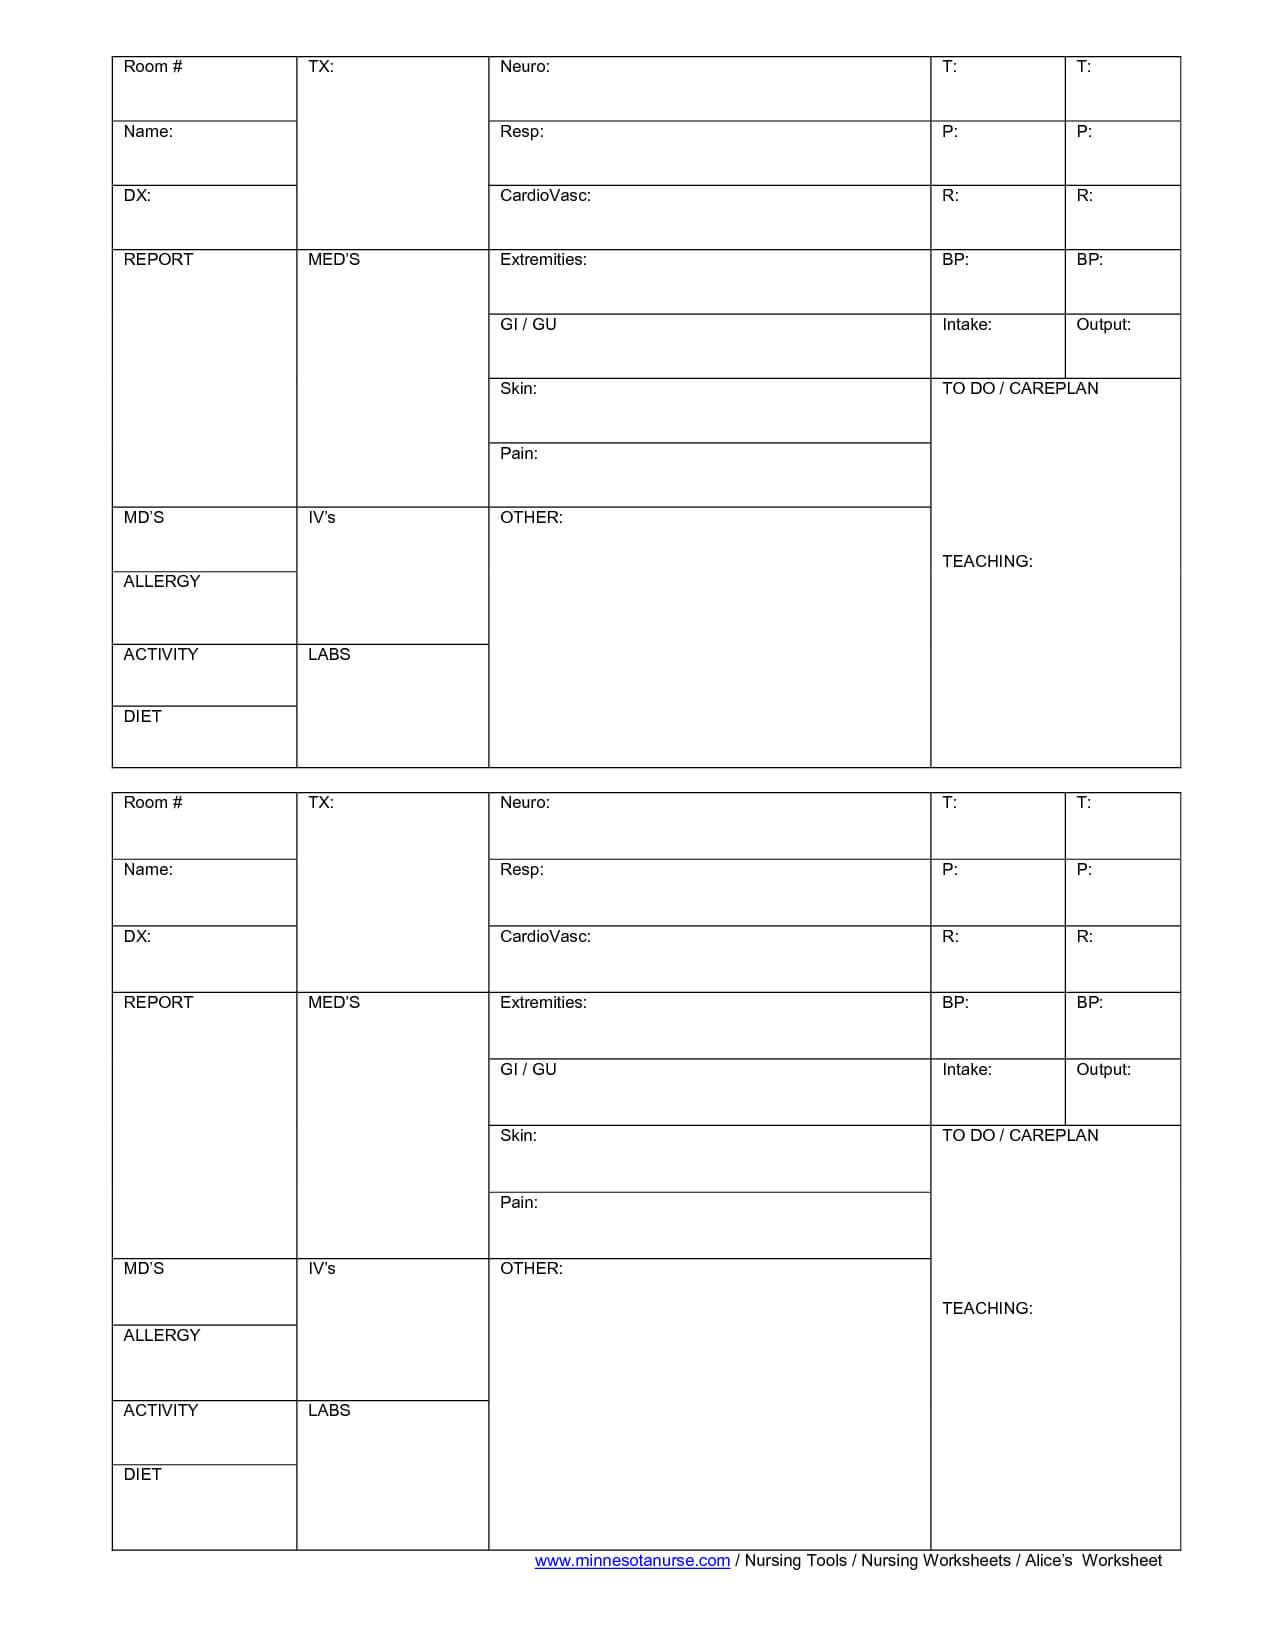 Blank Nursing Report Sheets For Newborns | Nursing Patient With Regard To Nursing Assistant Report Sheet Templates